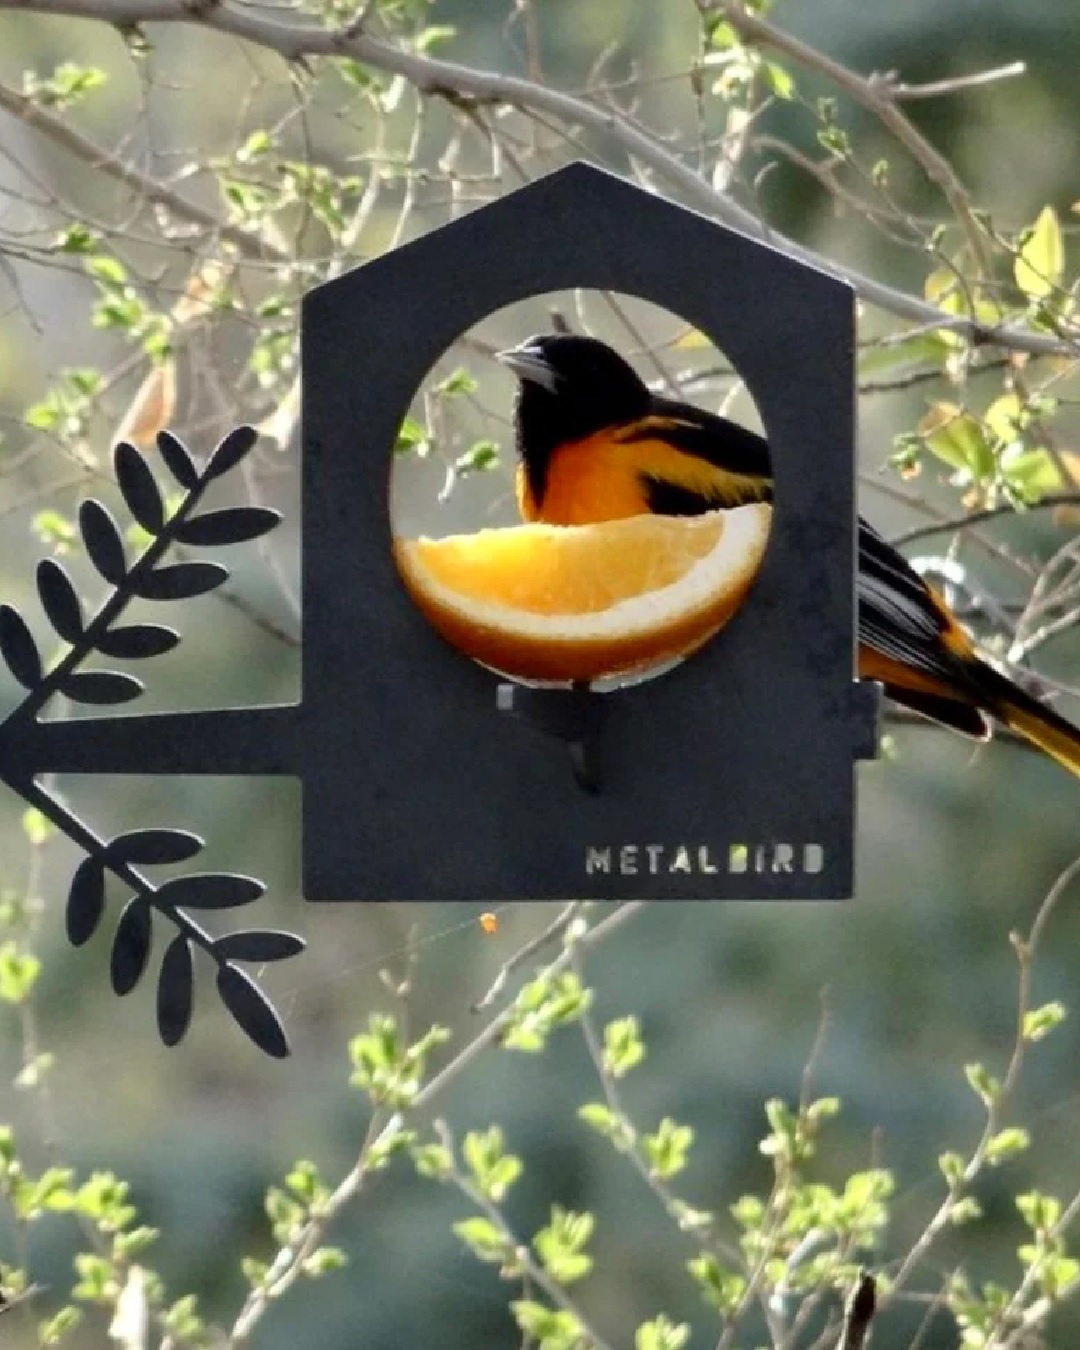 Metal bird feeder in tree